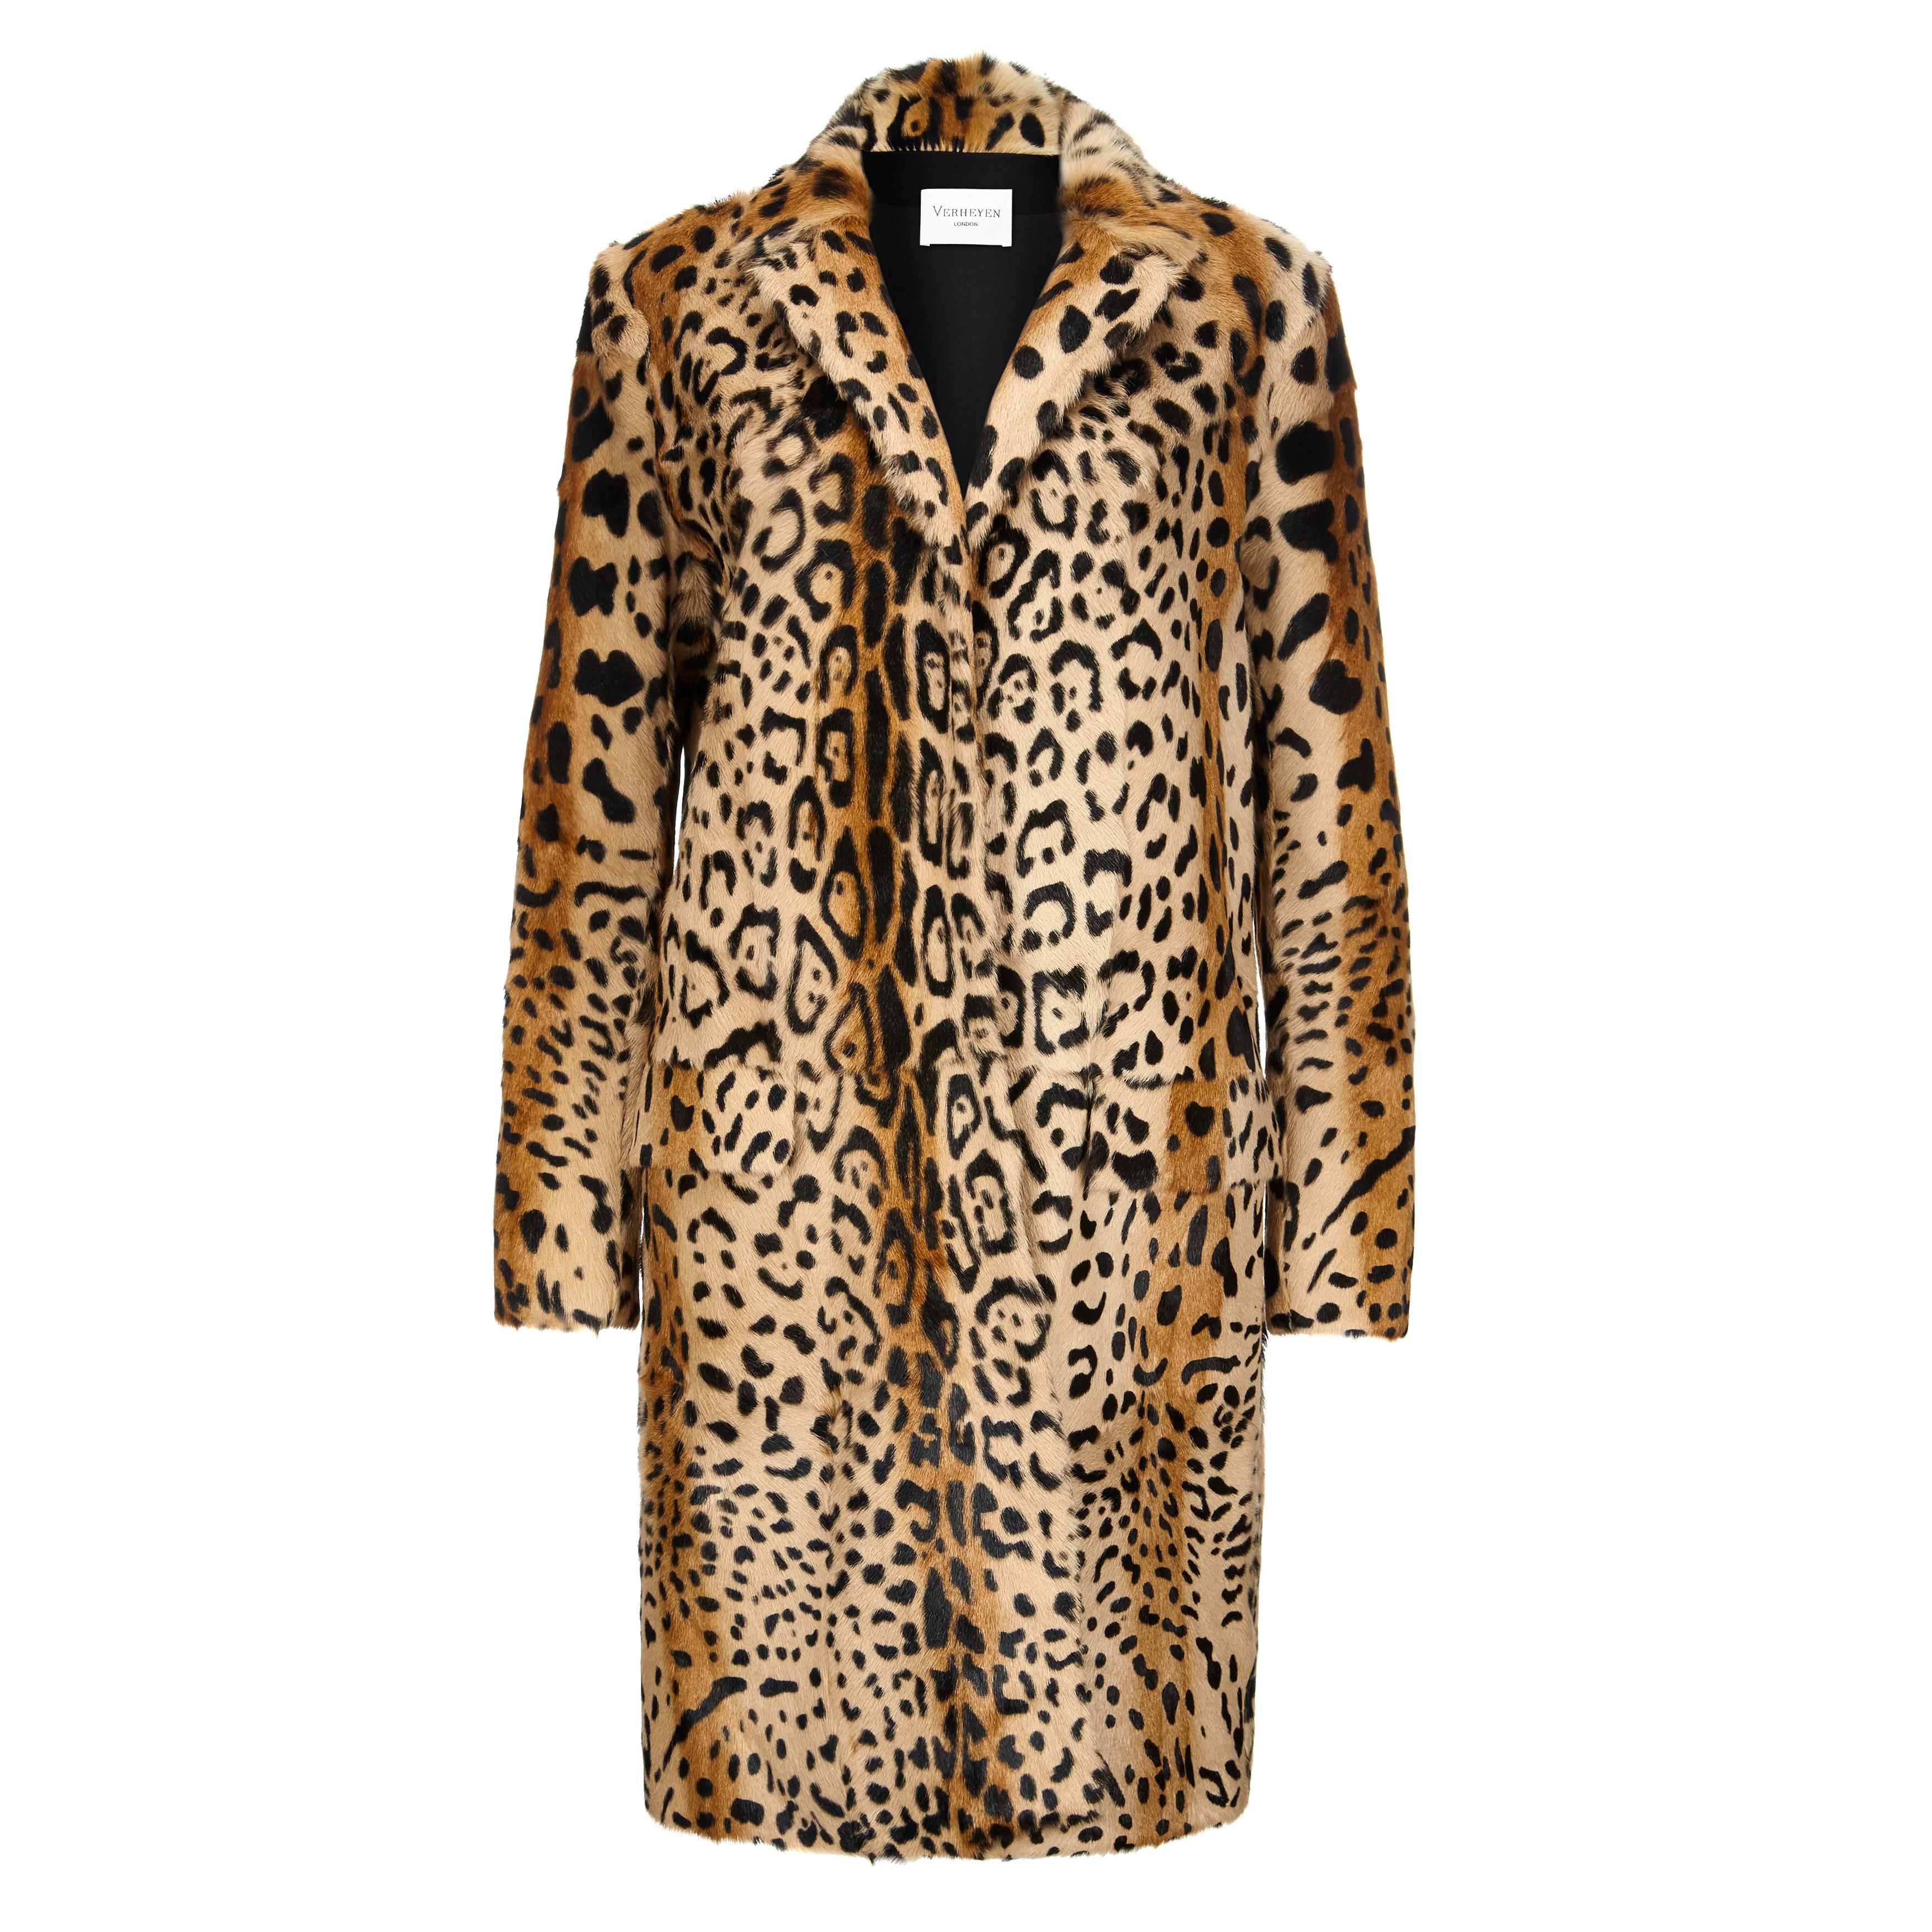 Verheyen London Leopard Print Coat in Natural Goat Hair Fur Size uk 8